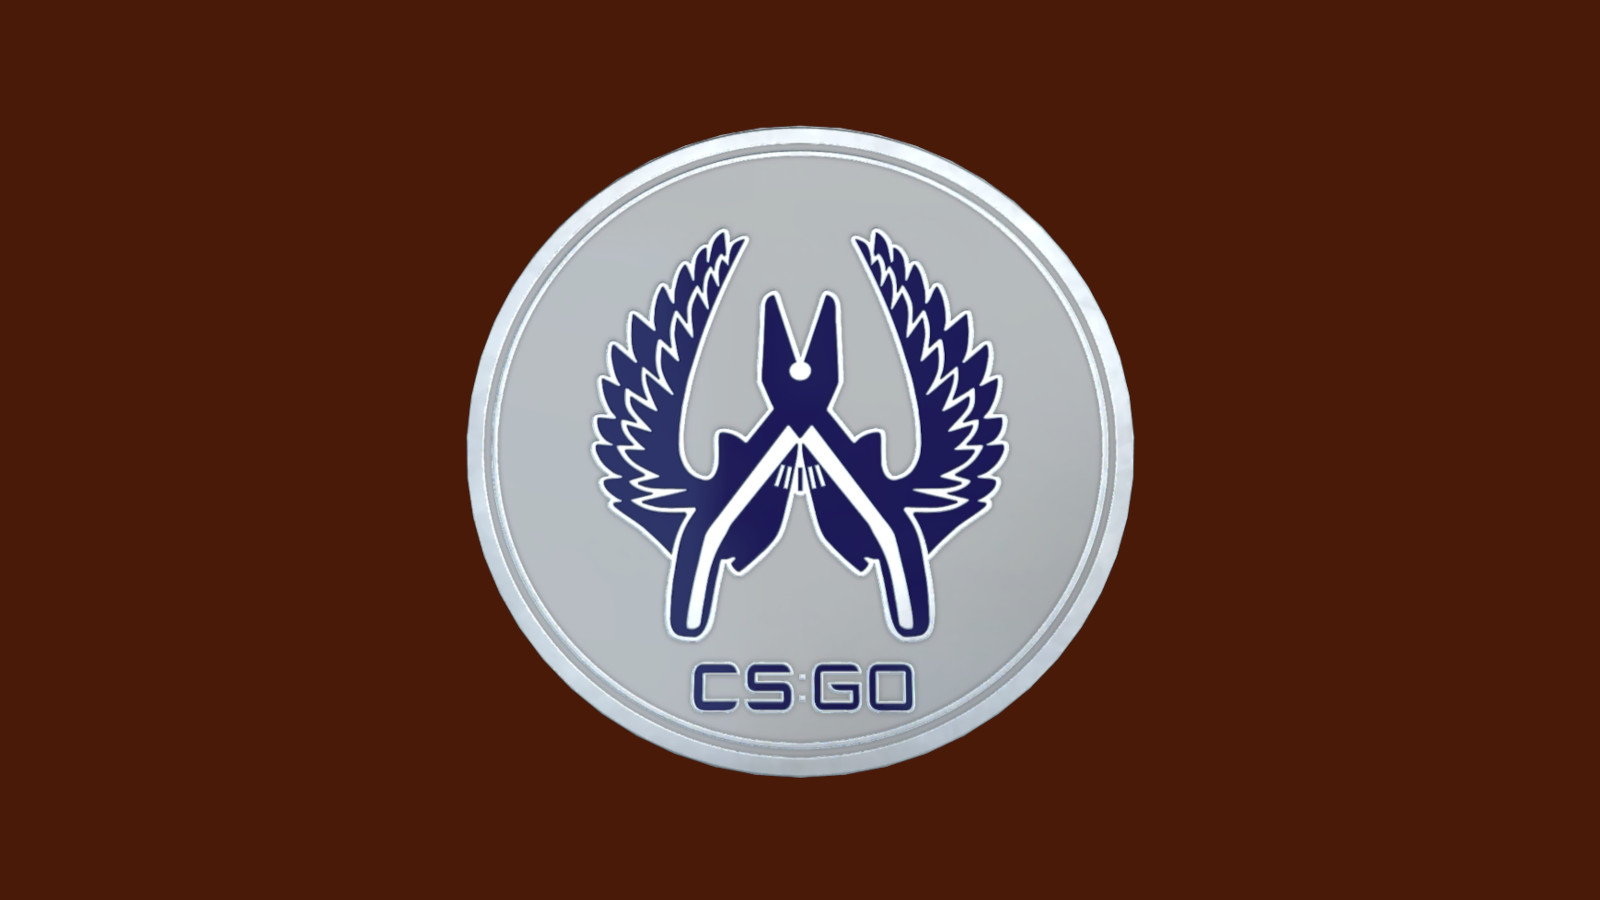 CS:GO - Series 3 - Guardian 3 Collectible Pin, 225.98$